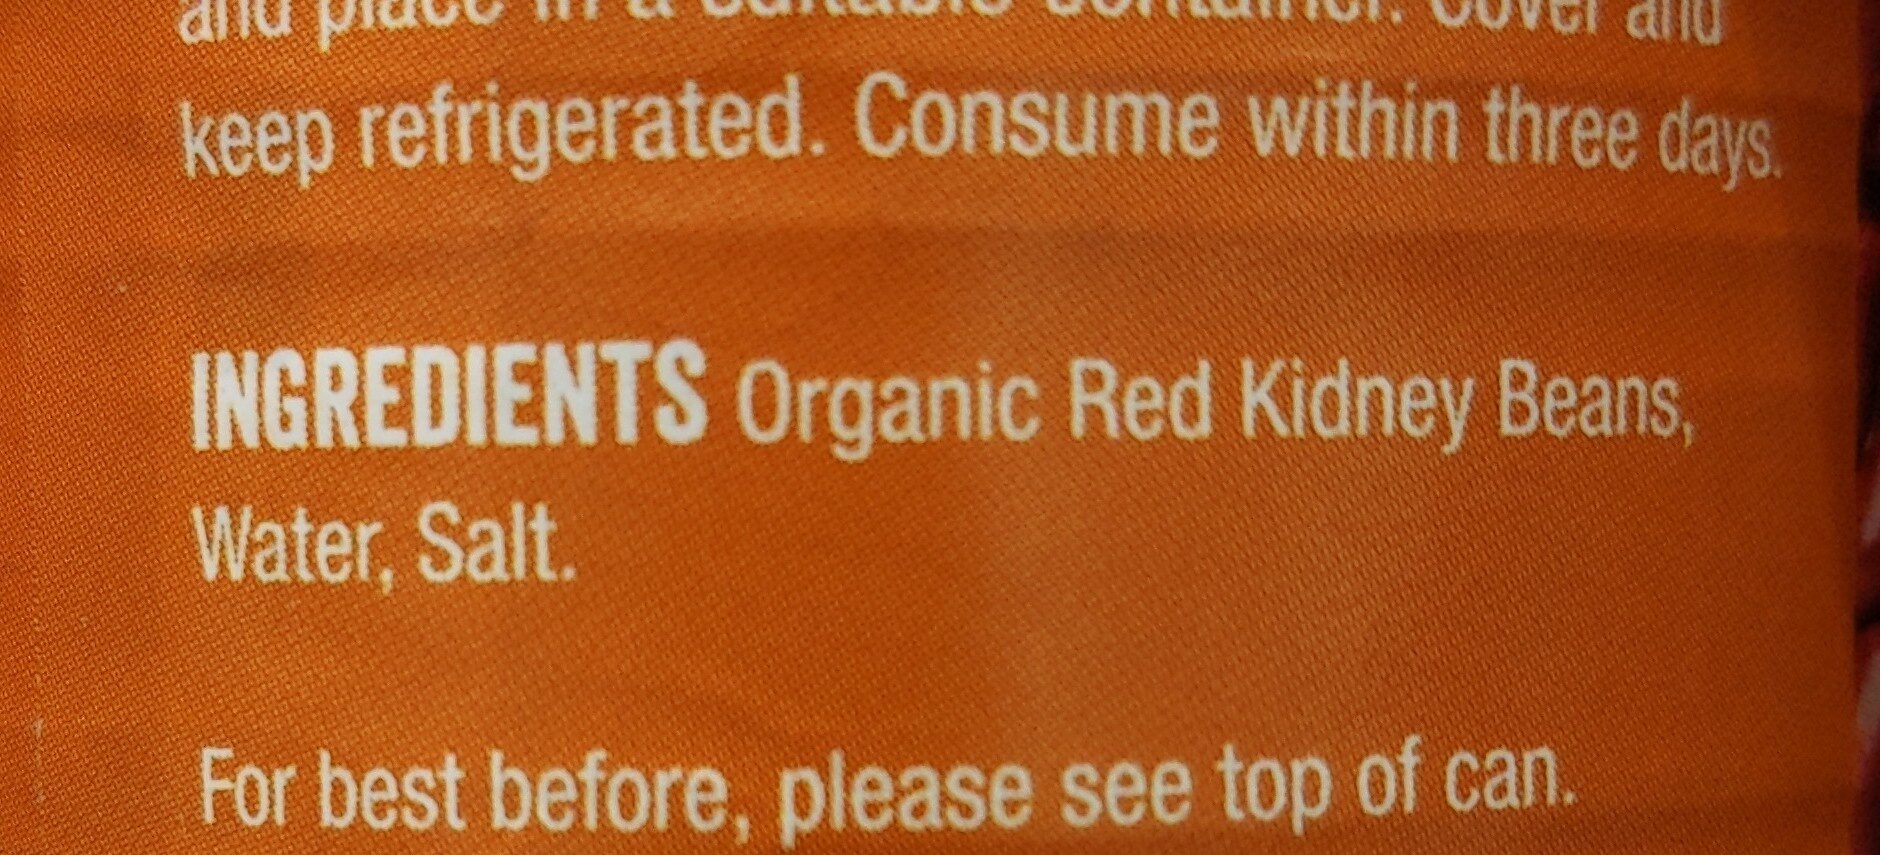 Red Kidney Beans - Ingredients